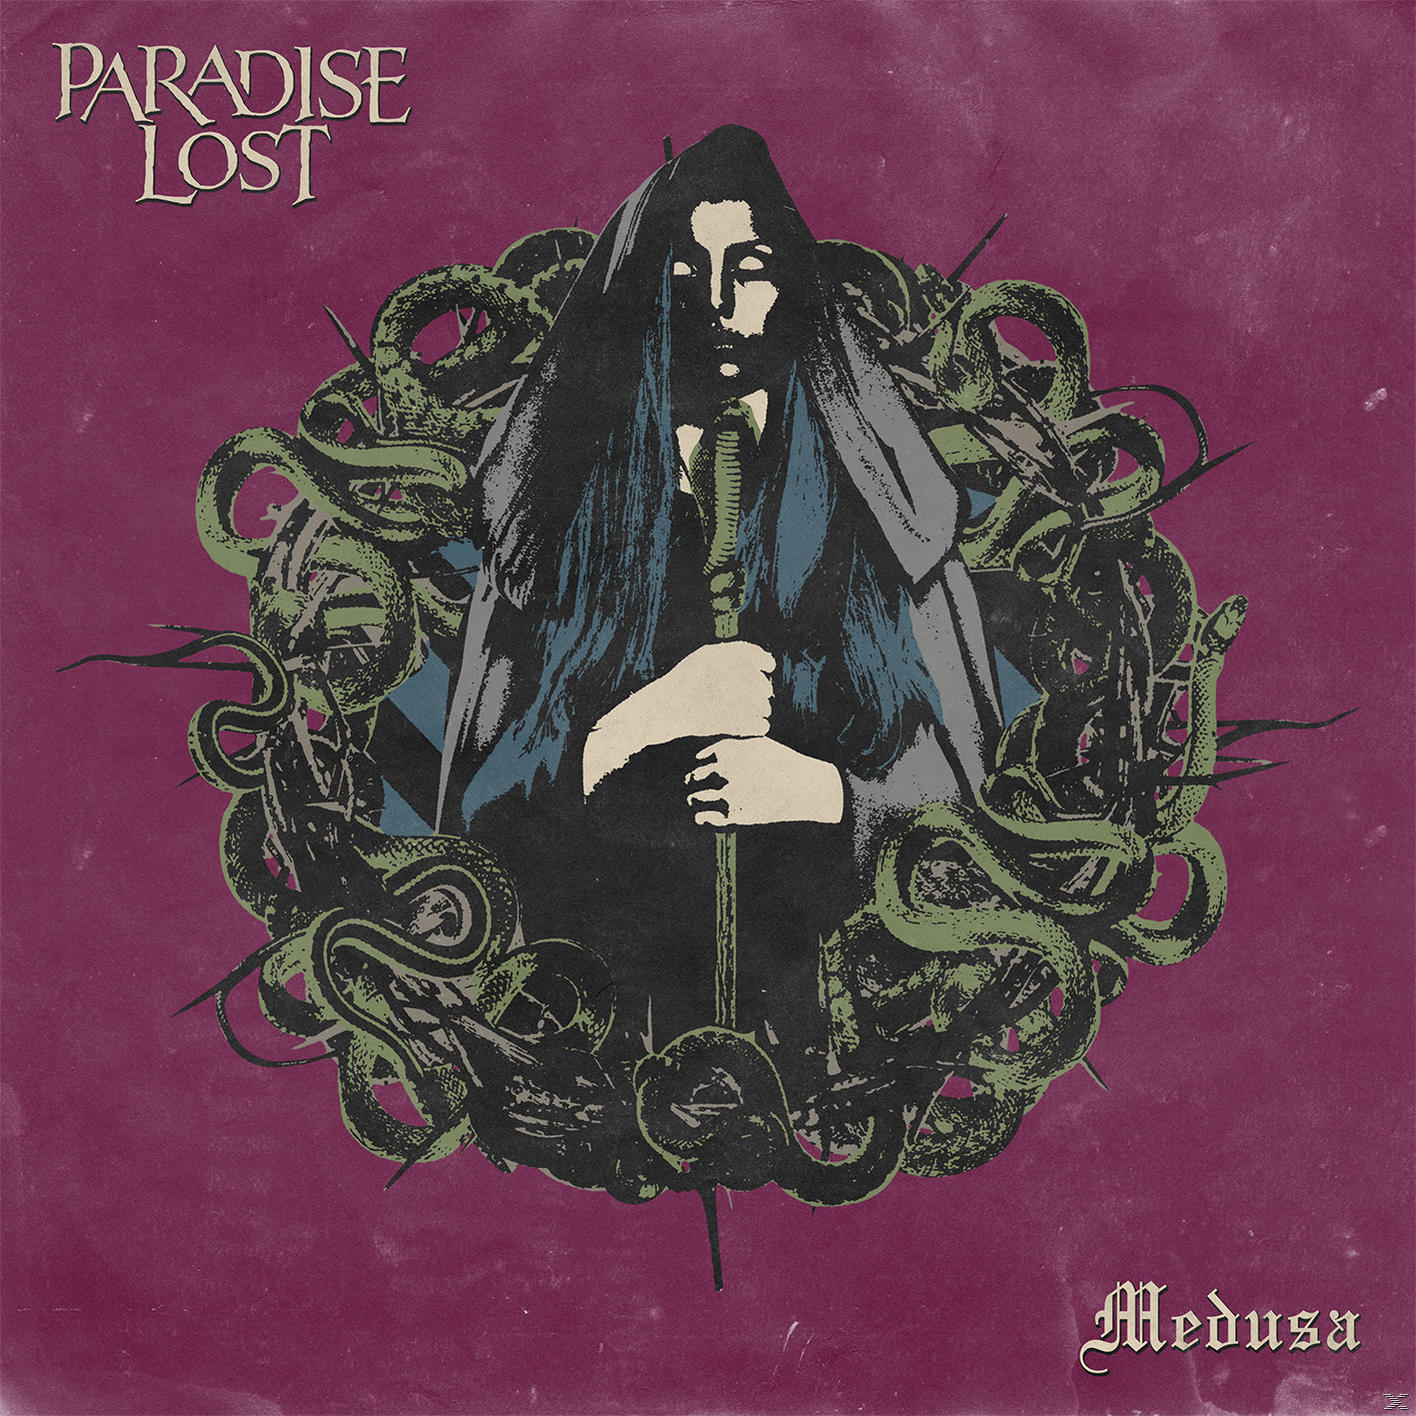 Lost - CD Paradise (Box) Medusa - + (LP Bonus-CD) +